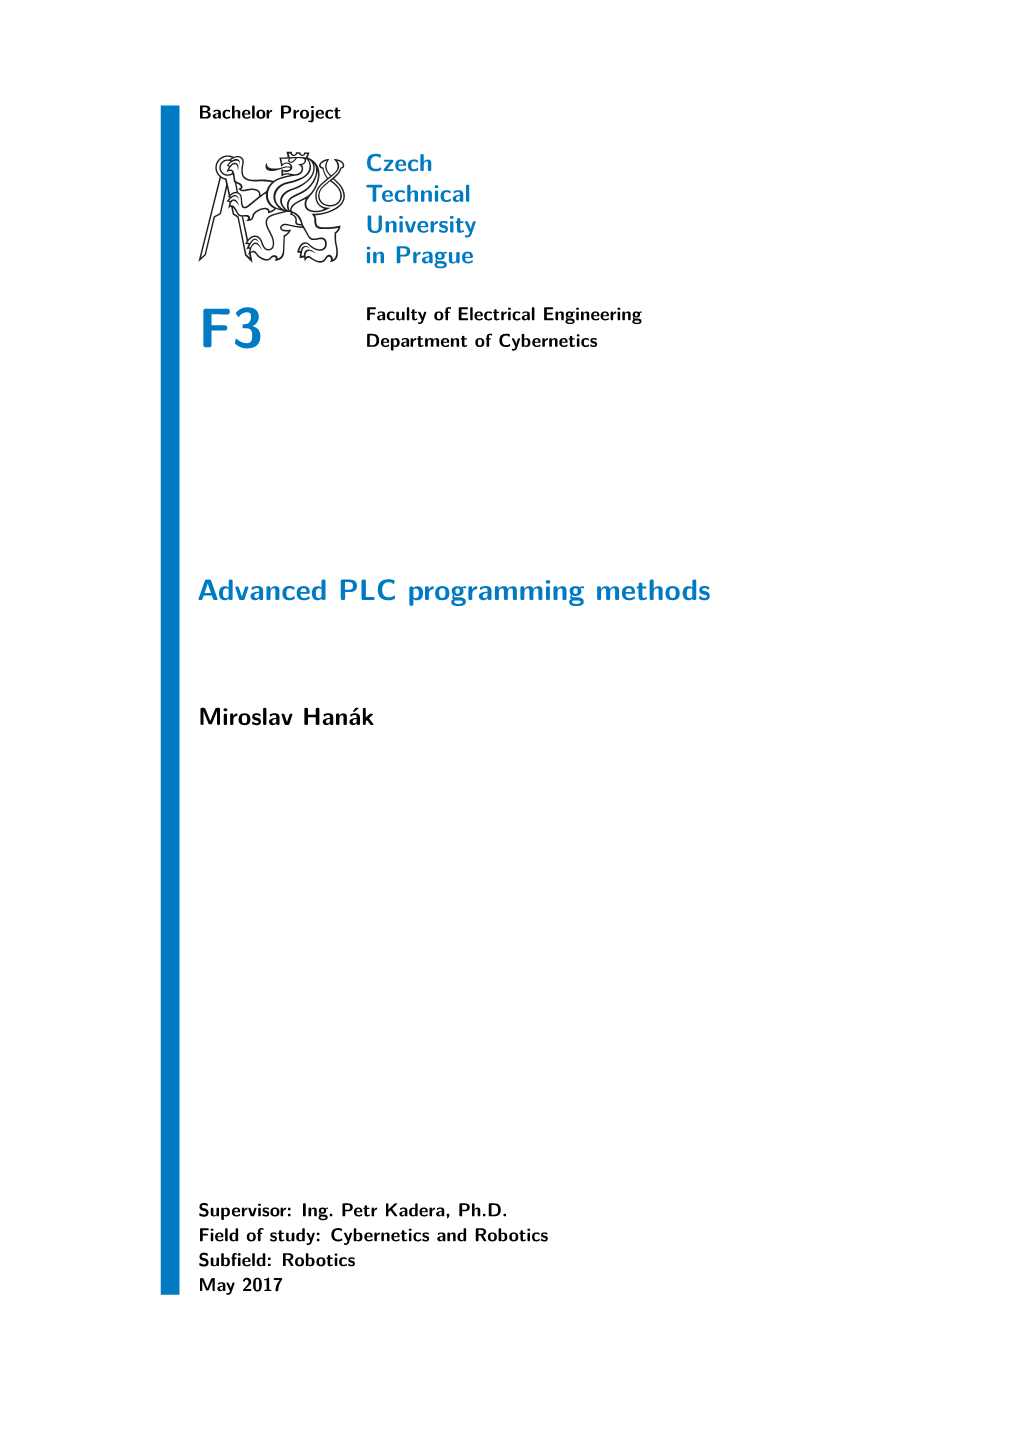 Advanced PLC Programming Methods